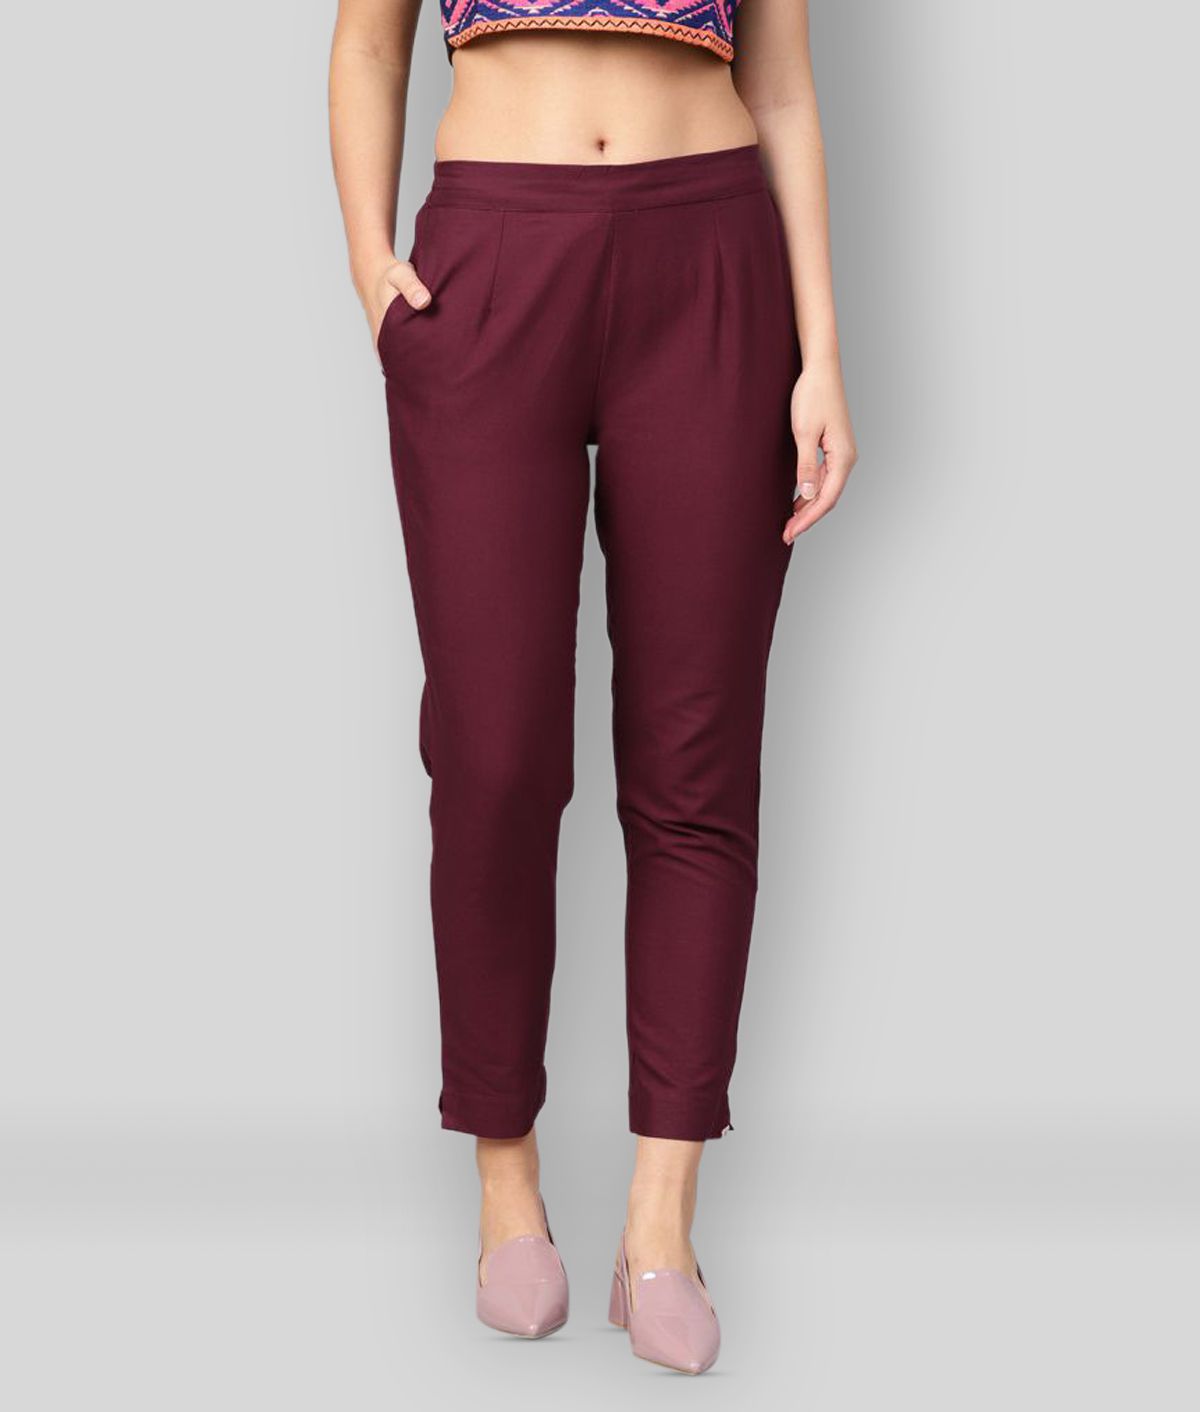     			Juniper - Maroon Cotton Slim Fit Women's Casual Pants  ( Pack of 1 )